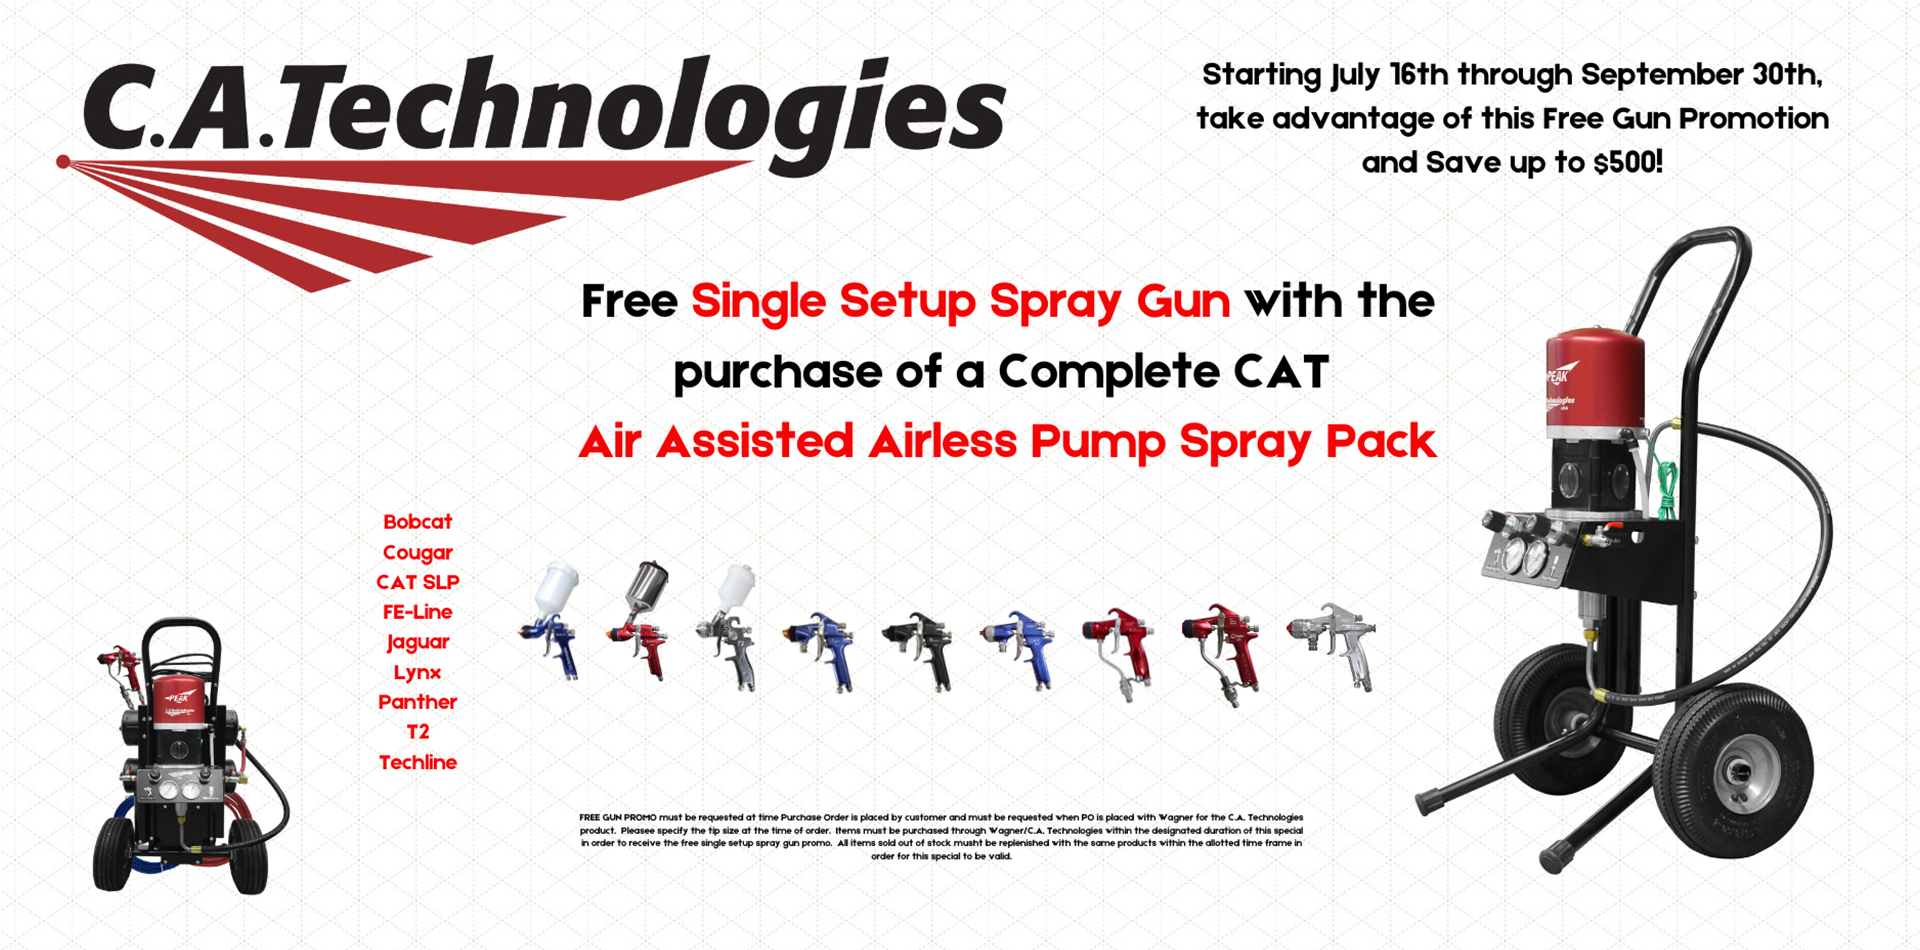 CA Technologies spray gun promo